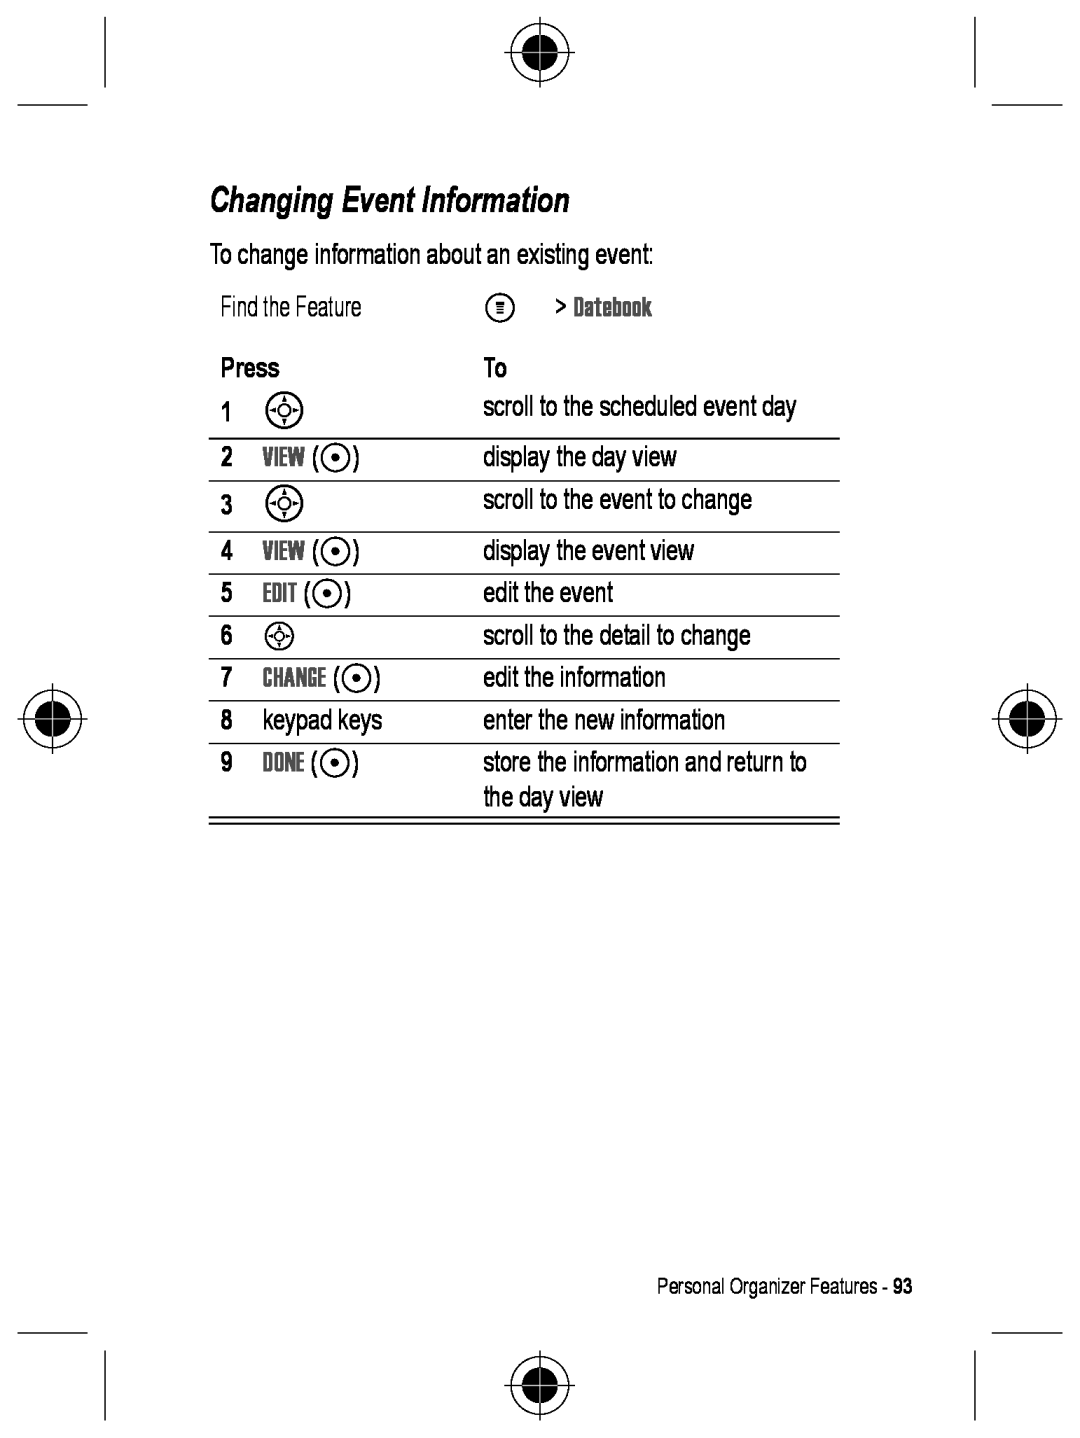 Motorola C330 manual Changing Event Information, M Datebook, View +, Edit +, Change +, Done 